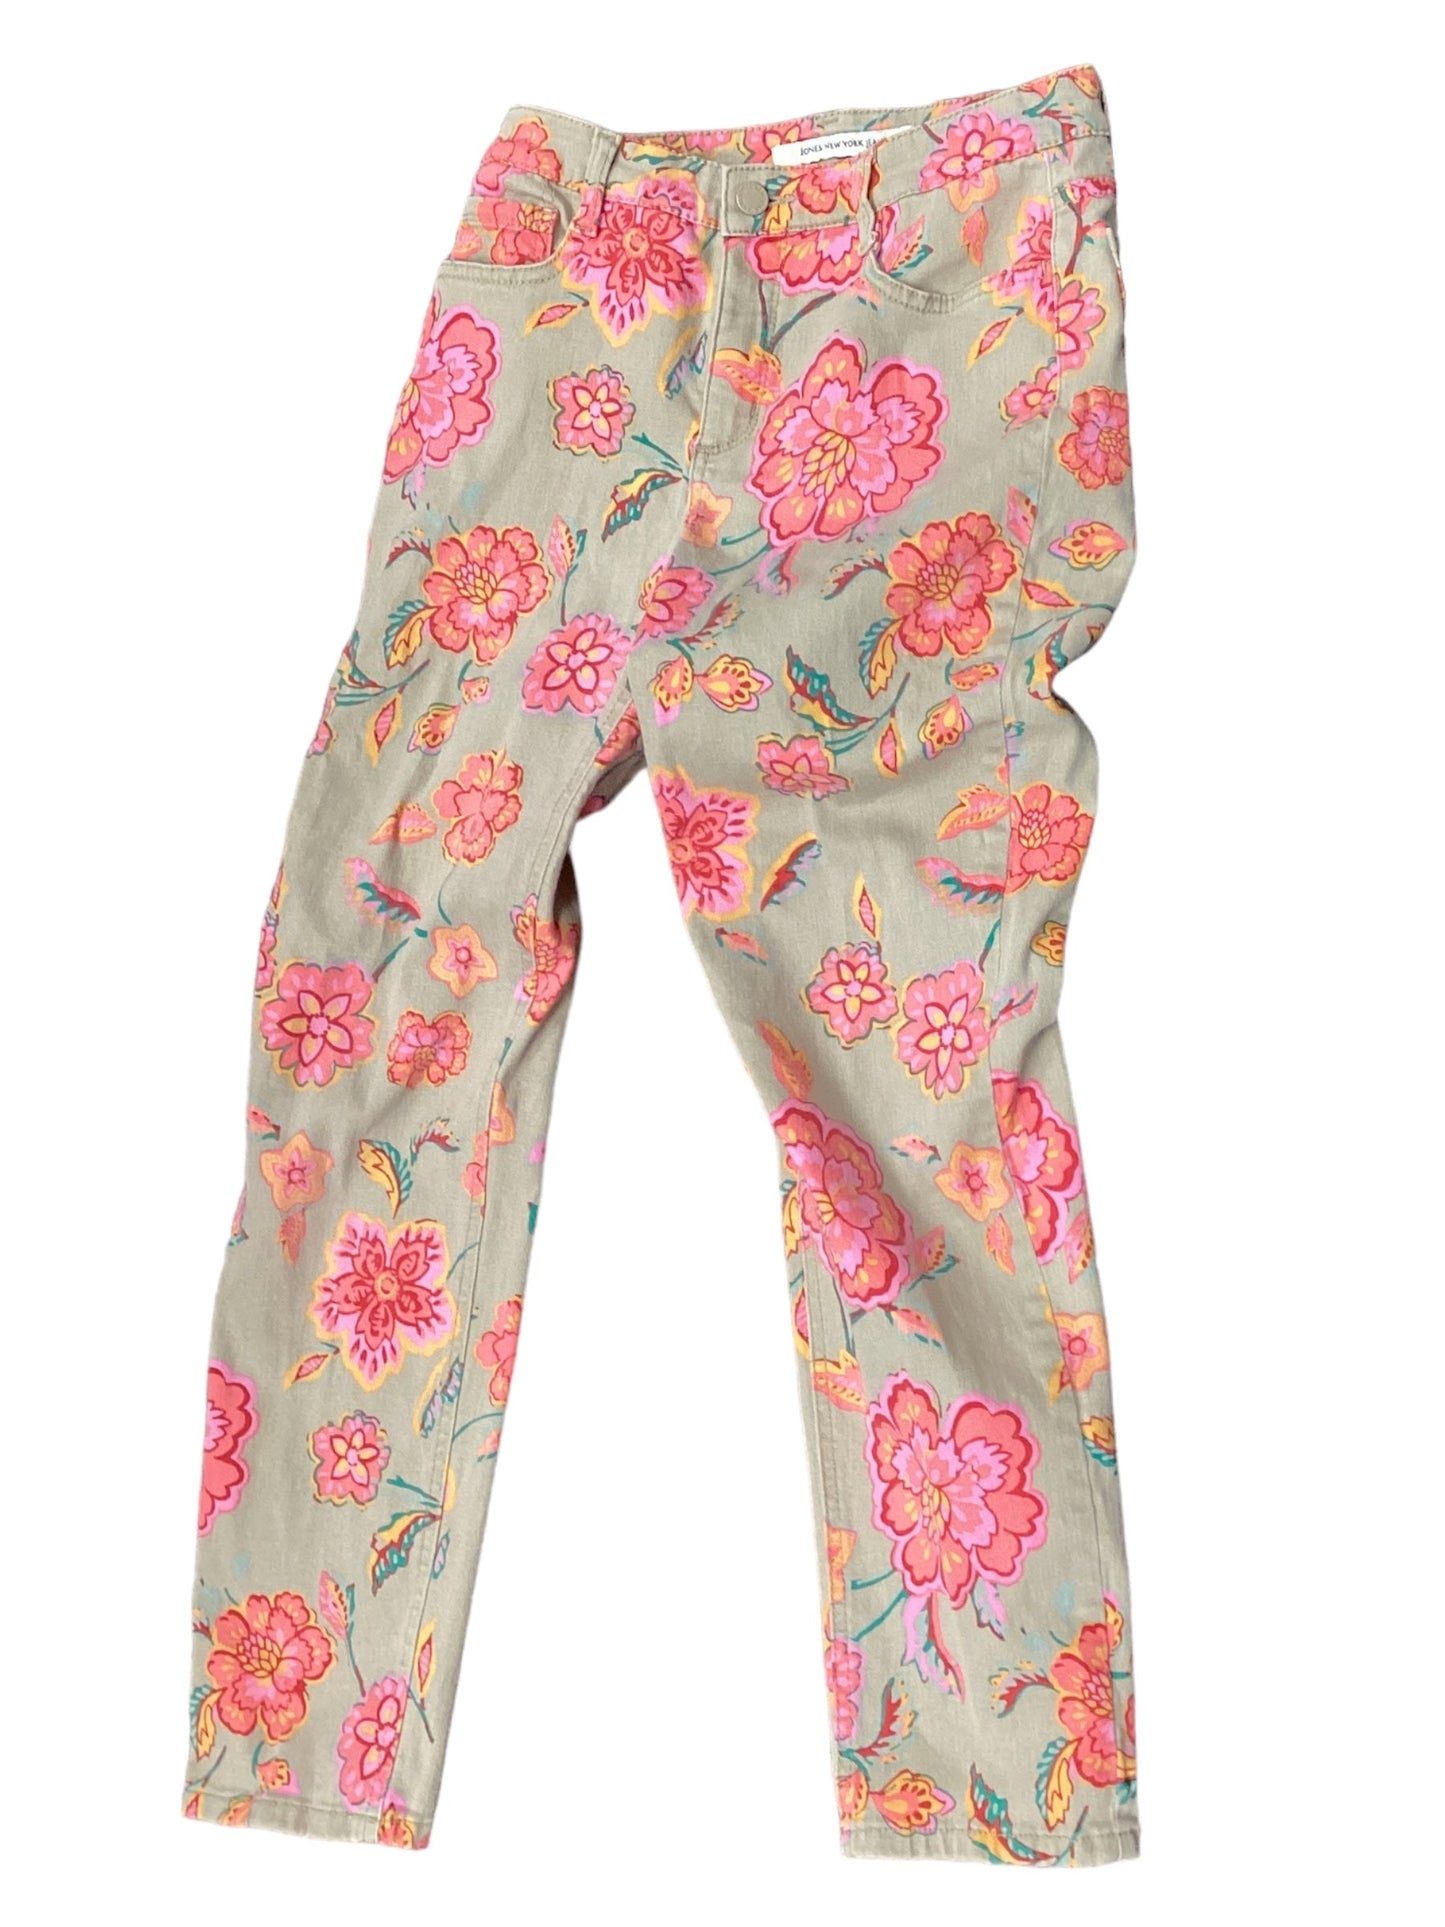 Floral Print Pants Other Jones New York, Size 8